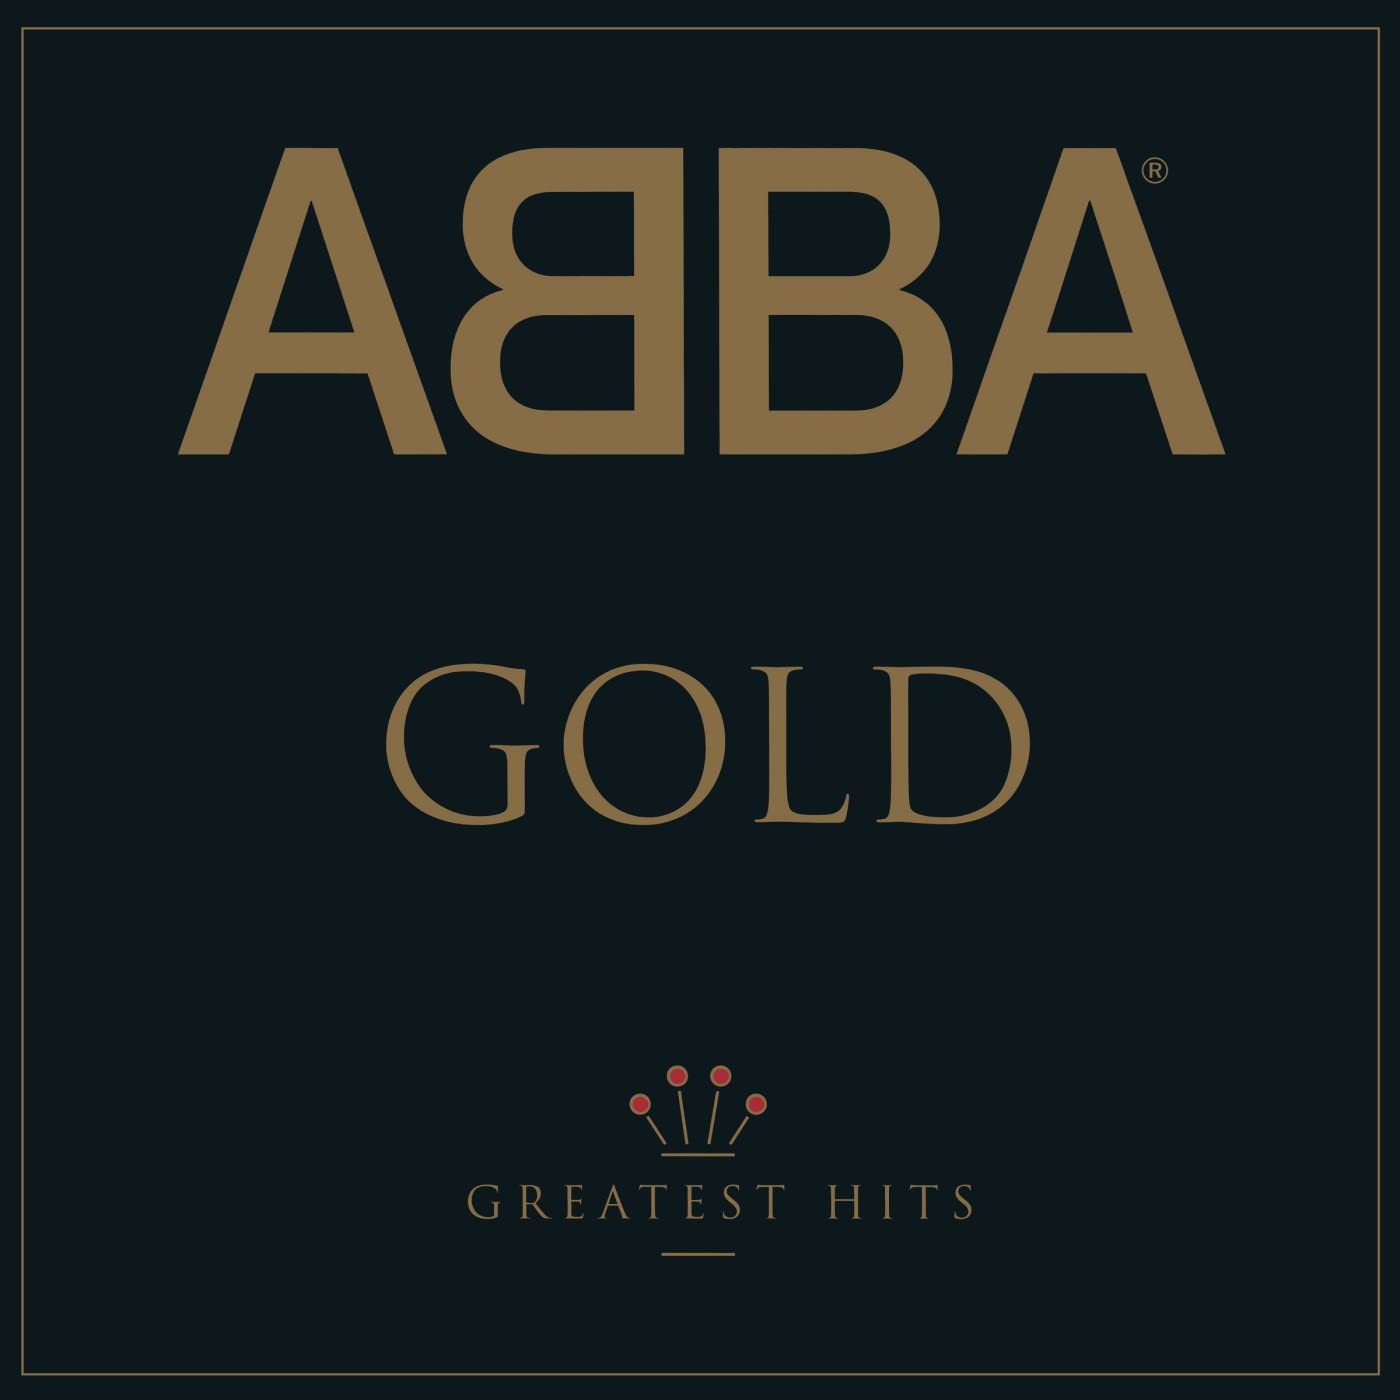 Abba - Gold Greatest Hits 30th Anniv. (Vinyl Gold 2LP)